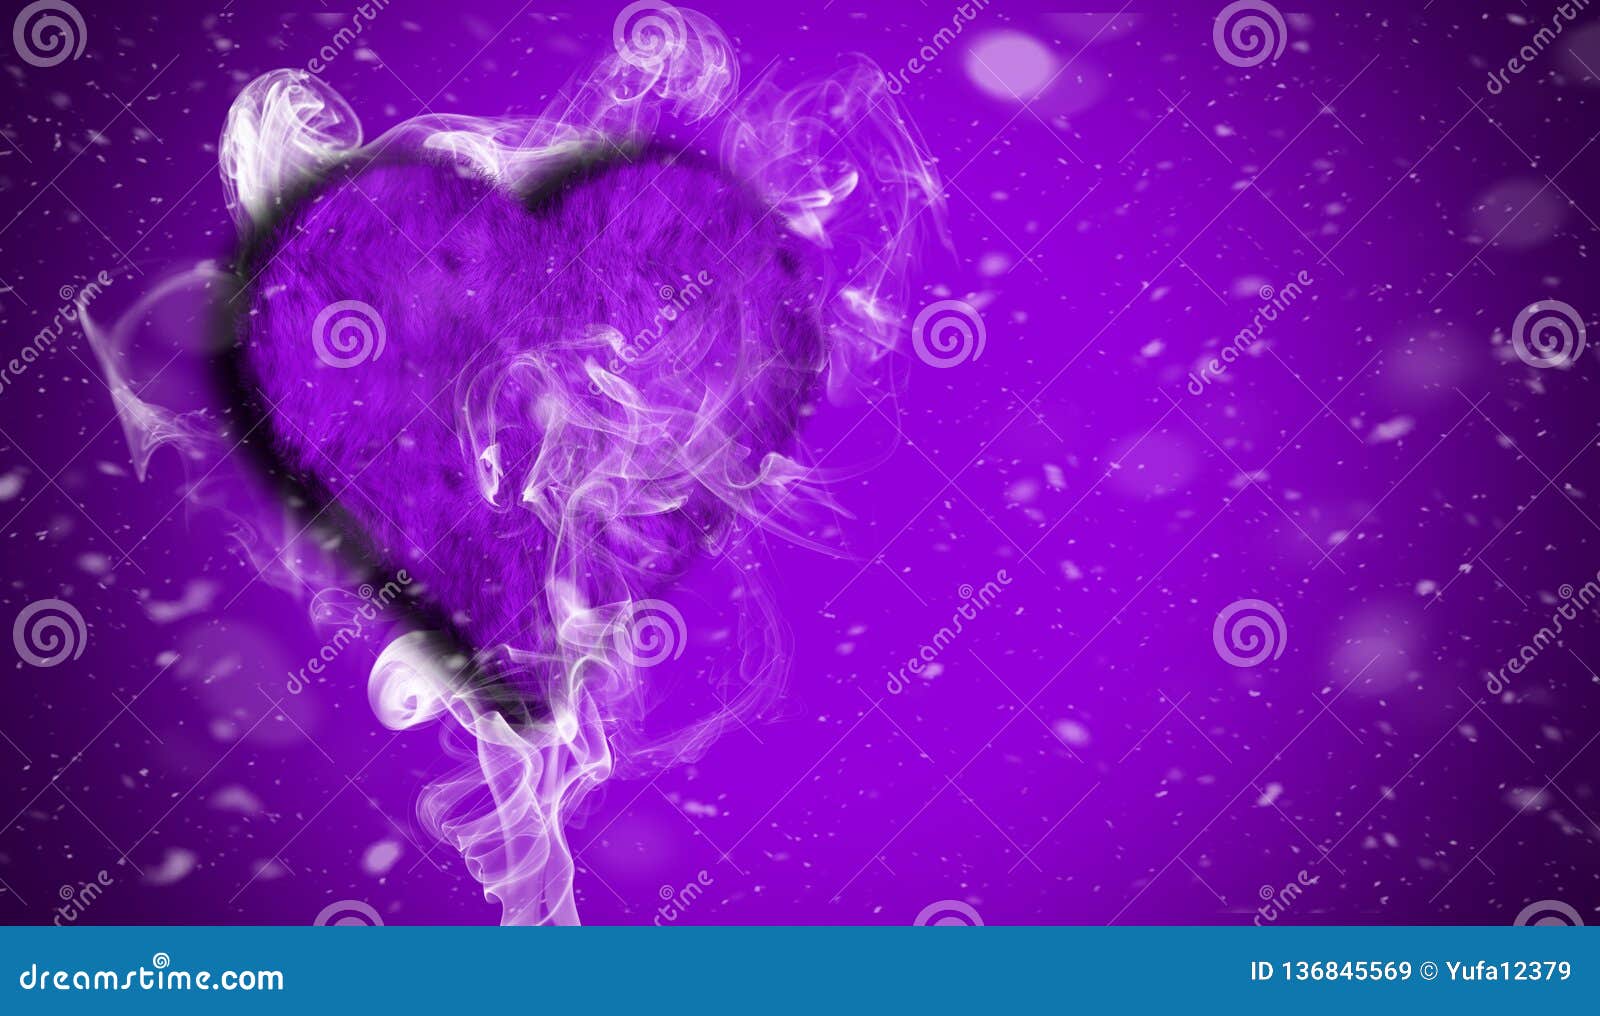 Purple heart перевод. Фиолетовый дым сердце. Сердце из дыма. Пурпурные сердца. Сердечко дымка фиолетовая.